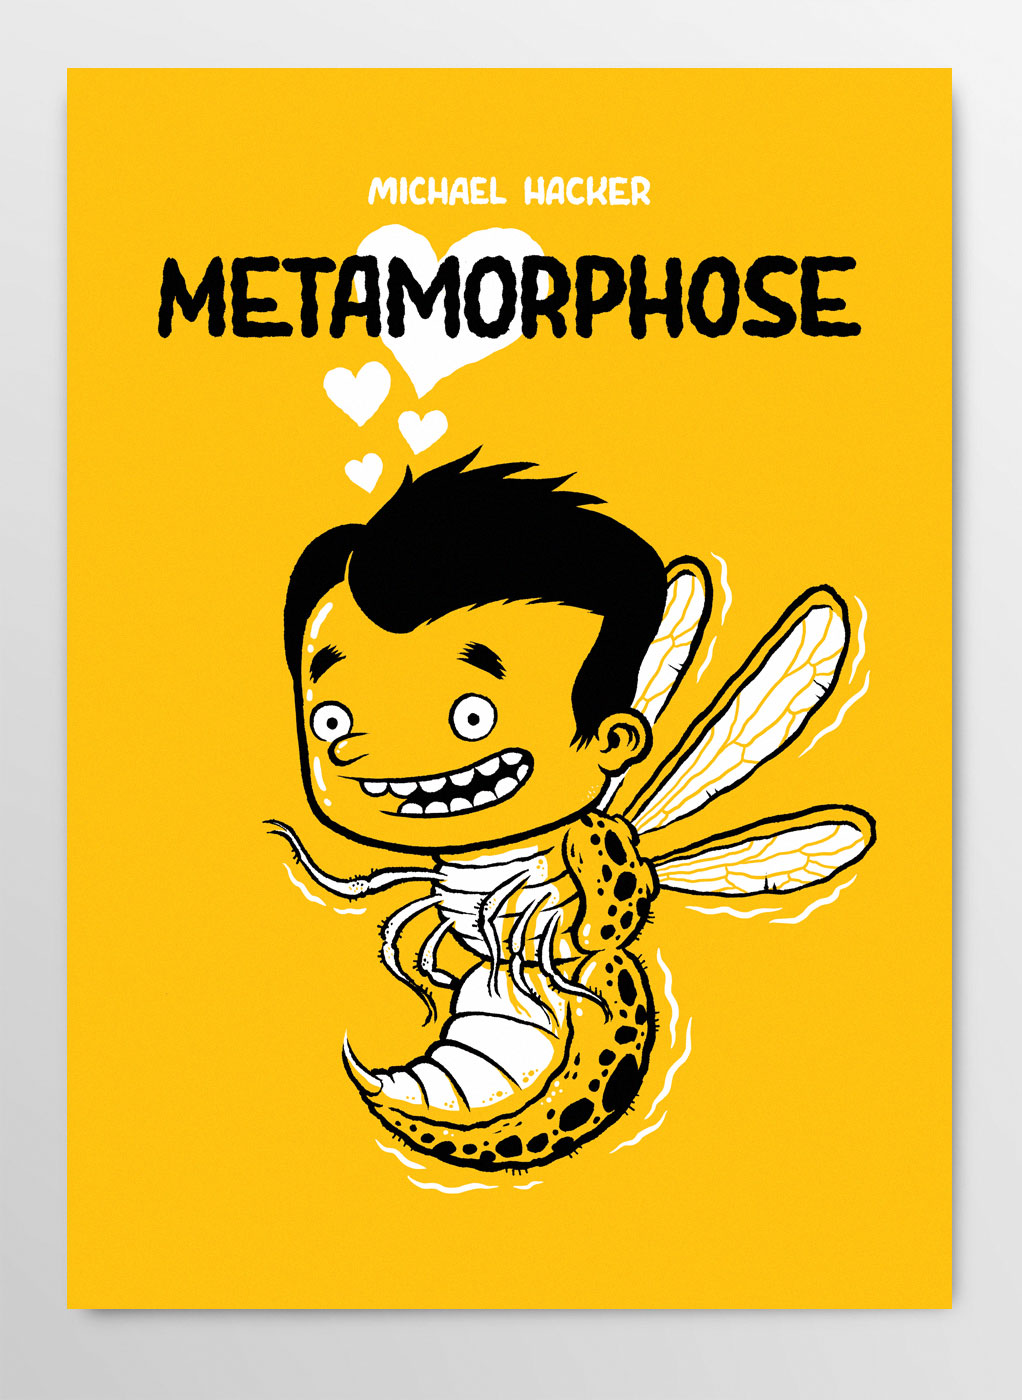 Metamorphose comic by Michael Hacker